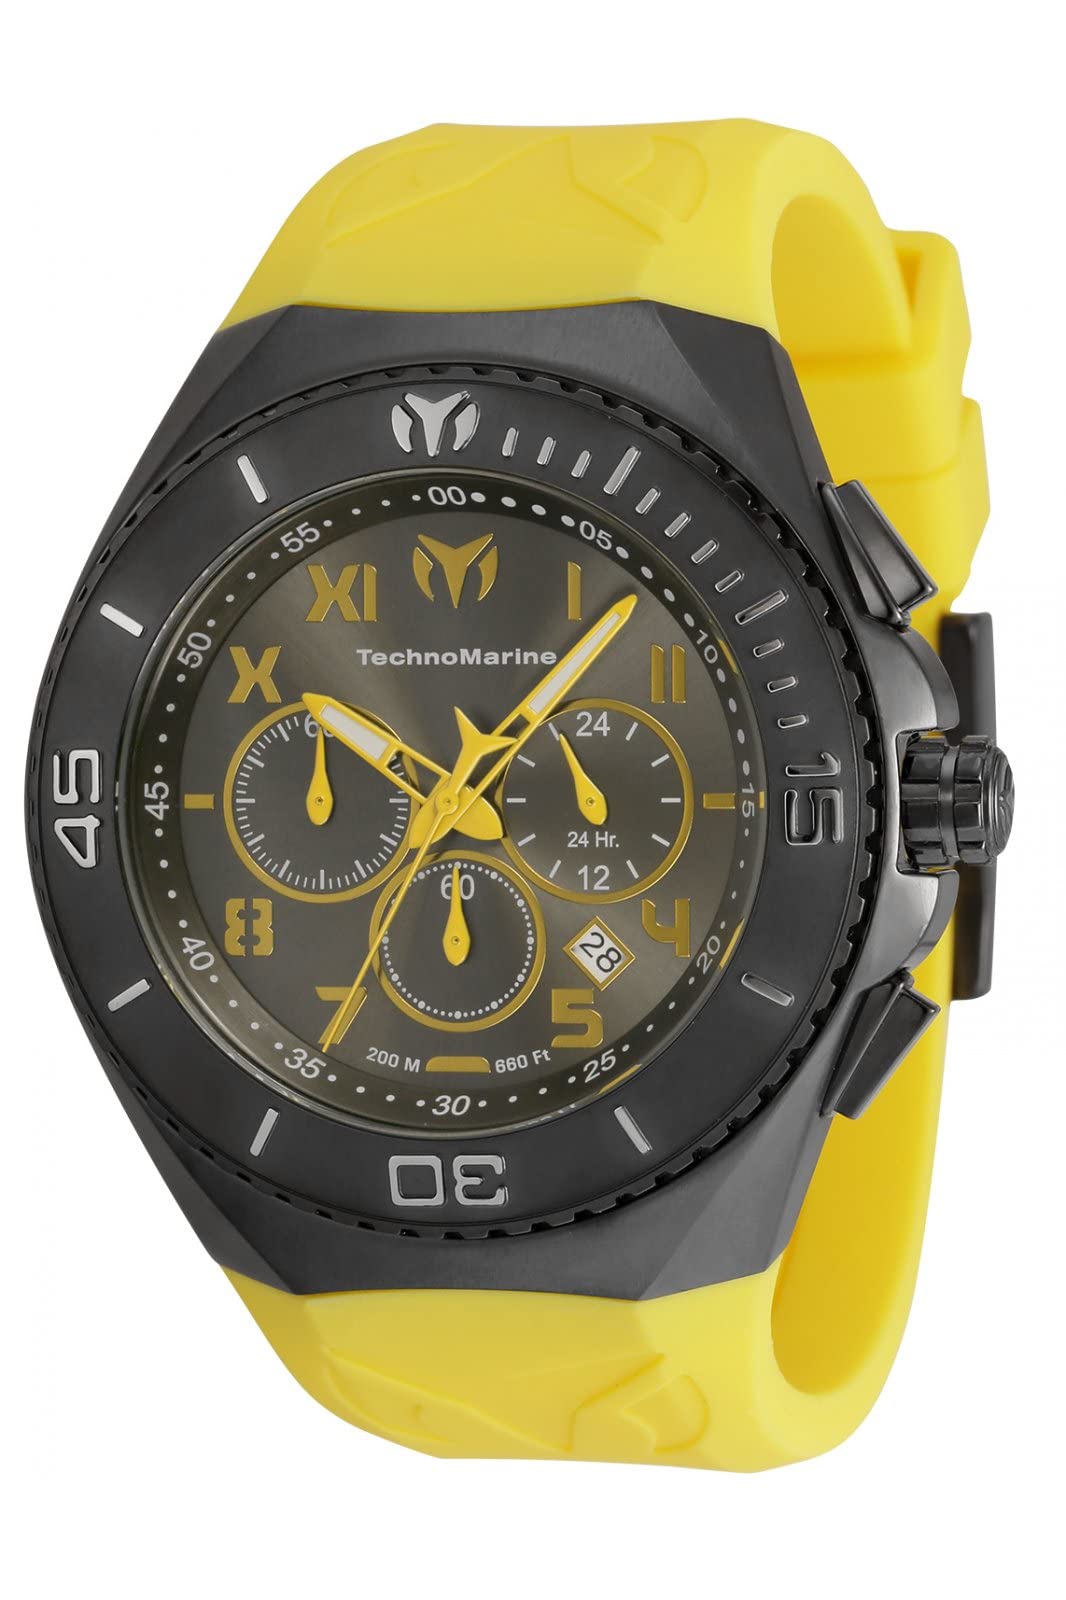 TechnoMarine Men's Ocean Manta Stainless Steel Quartz Watch with Silicone Strap, Yellow, 31 (Model: TM-220021)